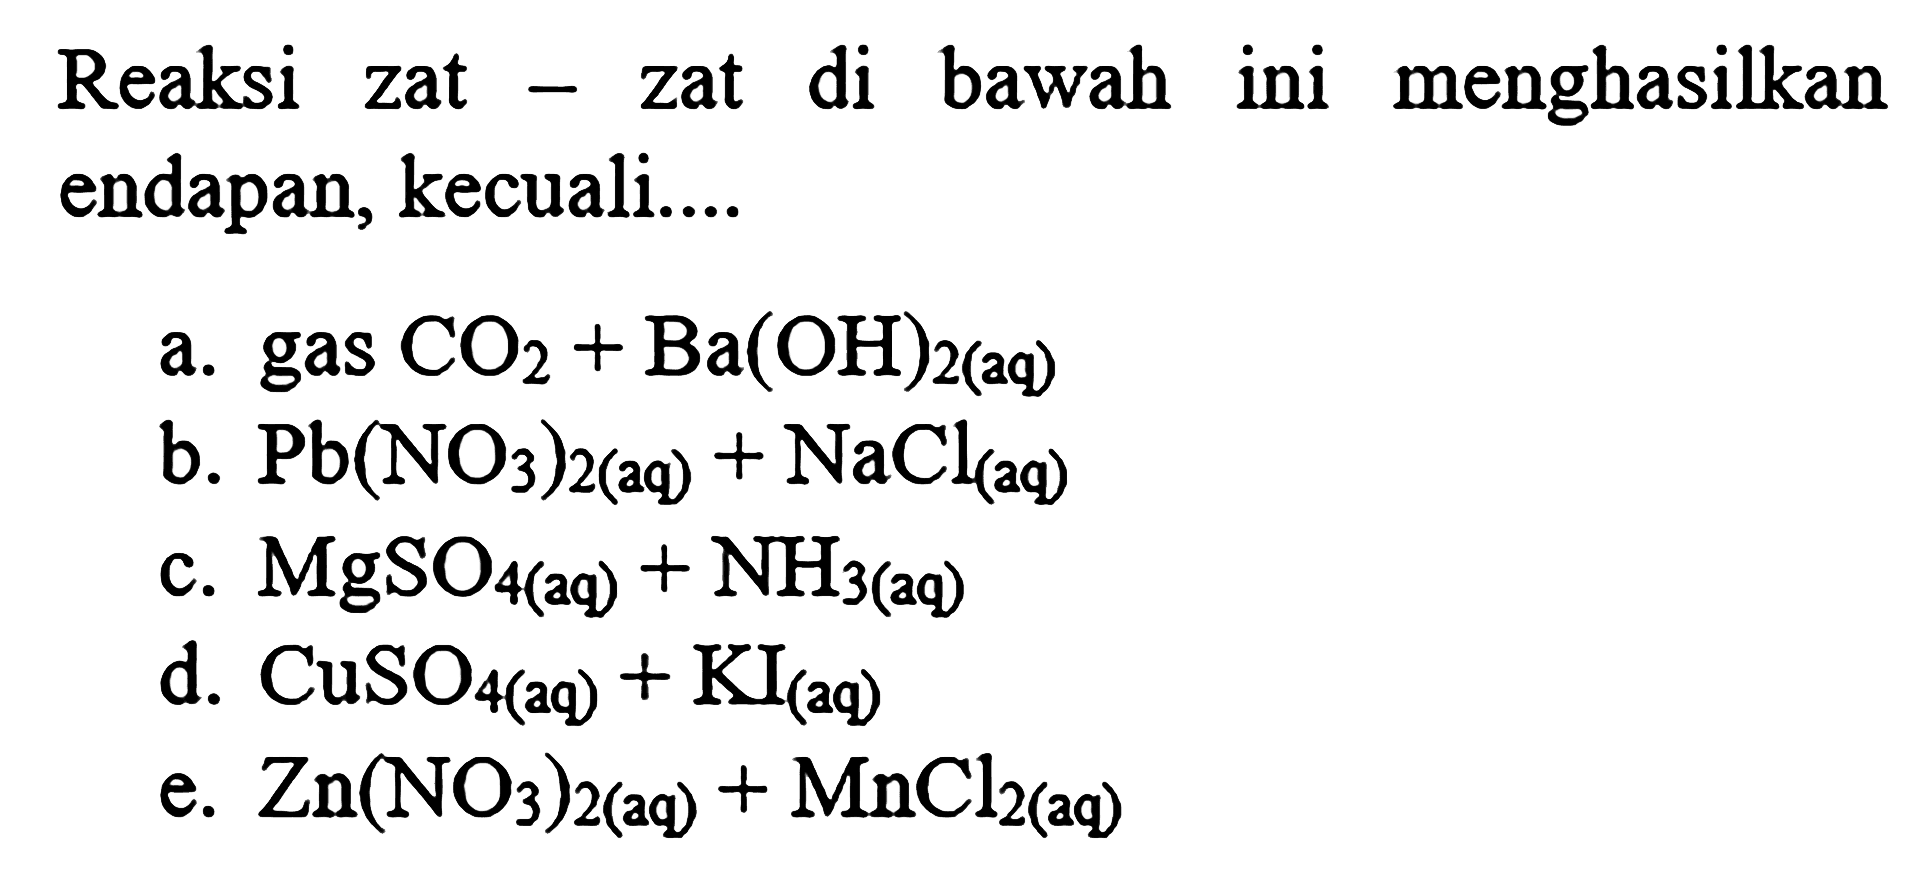 Reaksi zat - zat di bawah ini menghasilkan endapan, kecuali....
a. gas CO2+Ba(OH)2   (aq) 
b. Pb(NO3)2(aq)+NaCl(aq)
c. MgSO4(  aq )+NH3(  aq )
d. CuSO4(a q)+KI(a q)
e. Zn(NO3)2(aq)+MnCl2(aq)